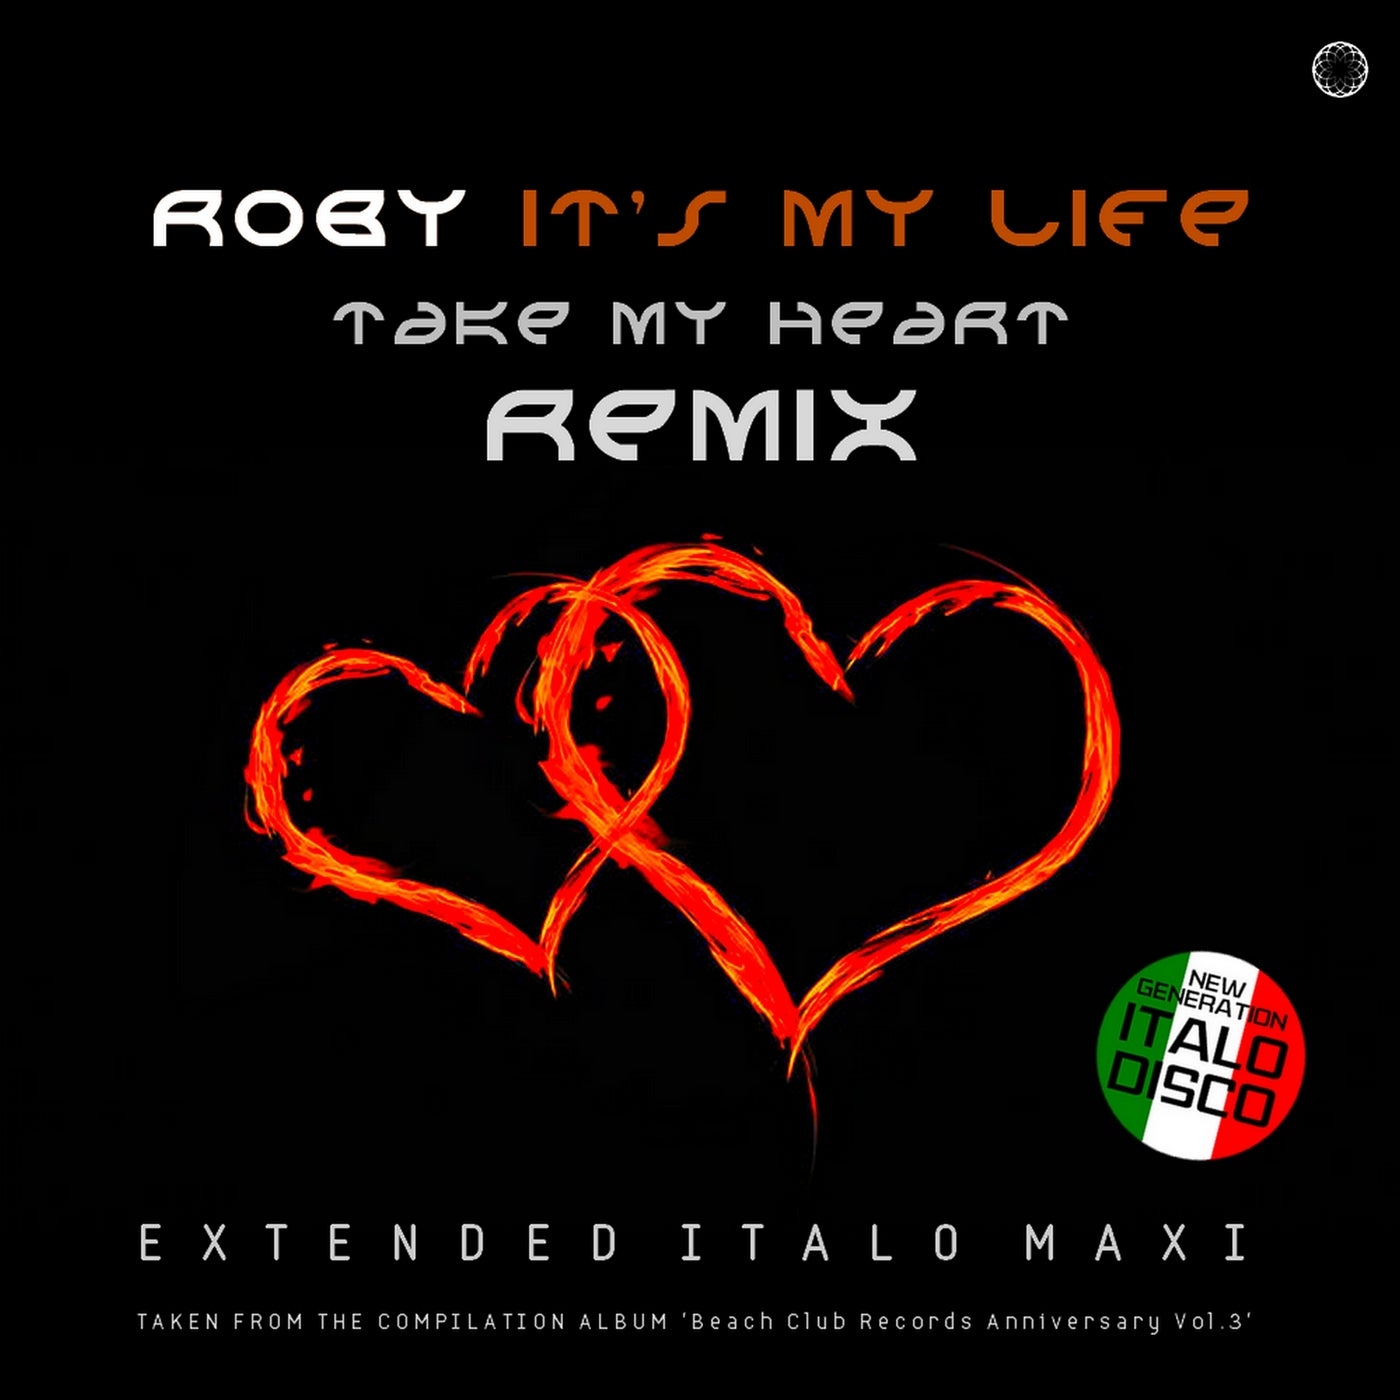 It's My Life / Take My Heart (Remix)